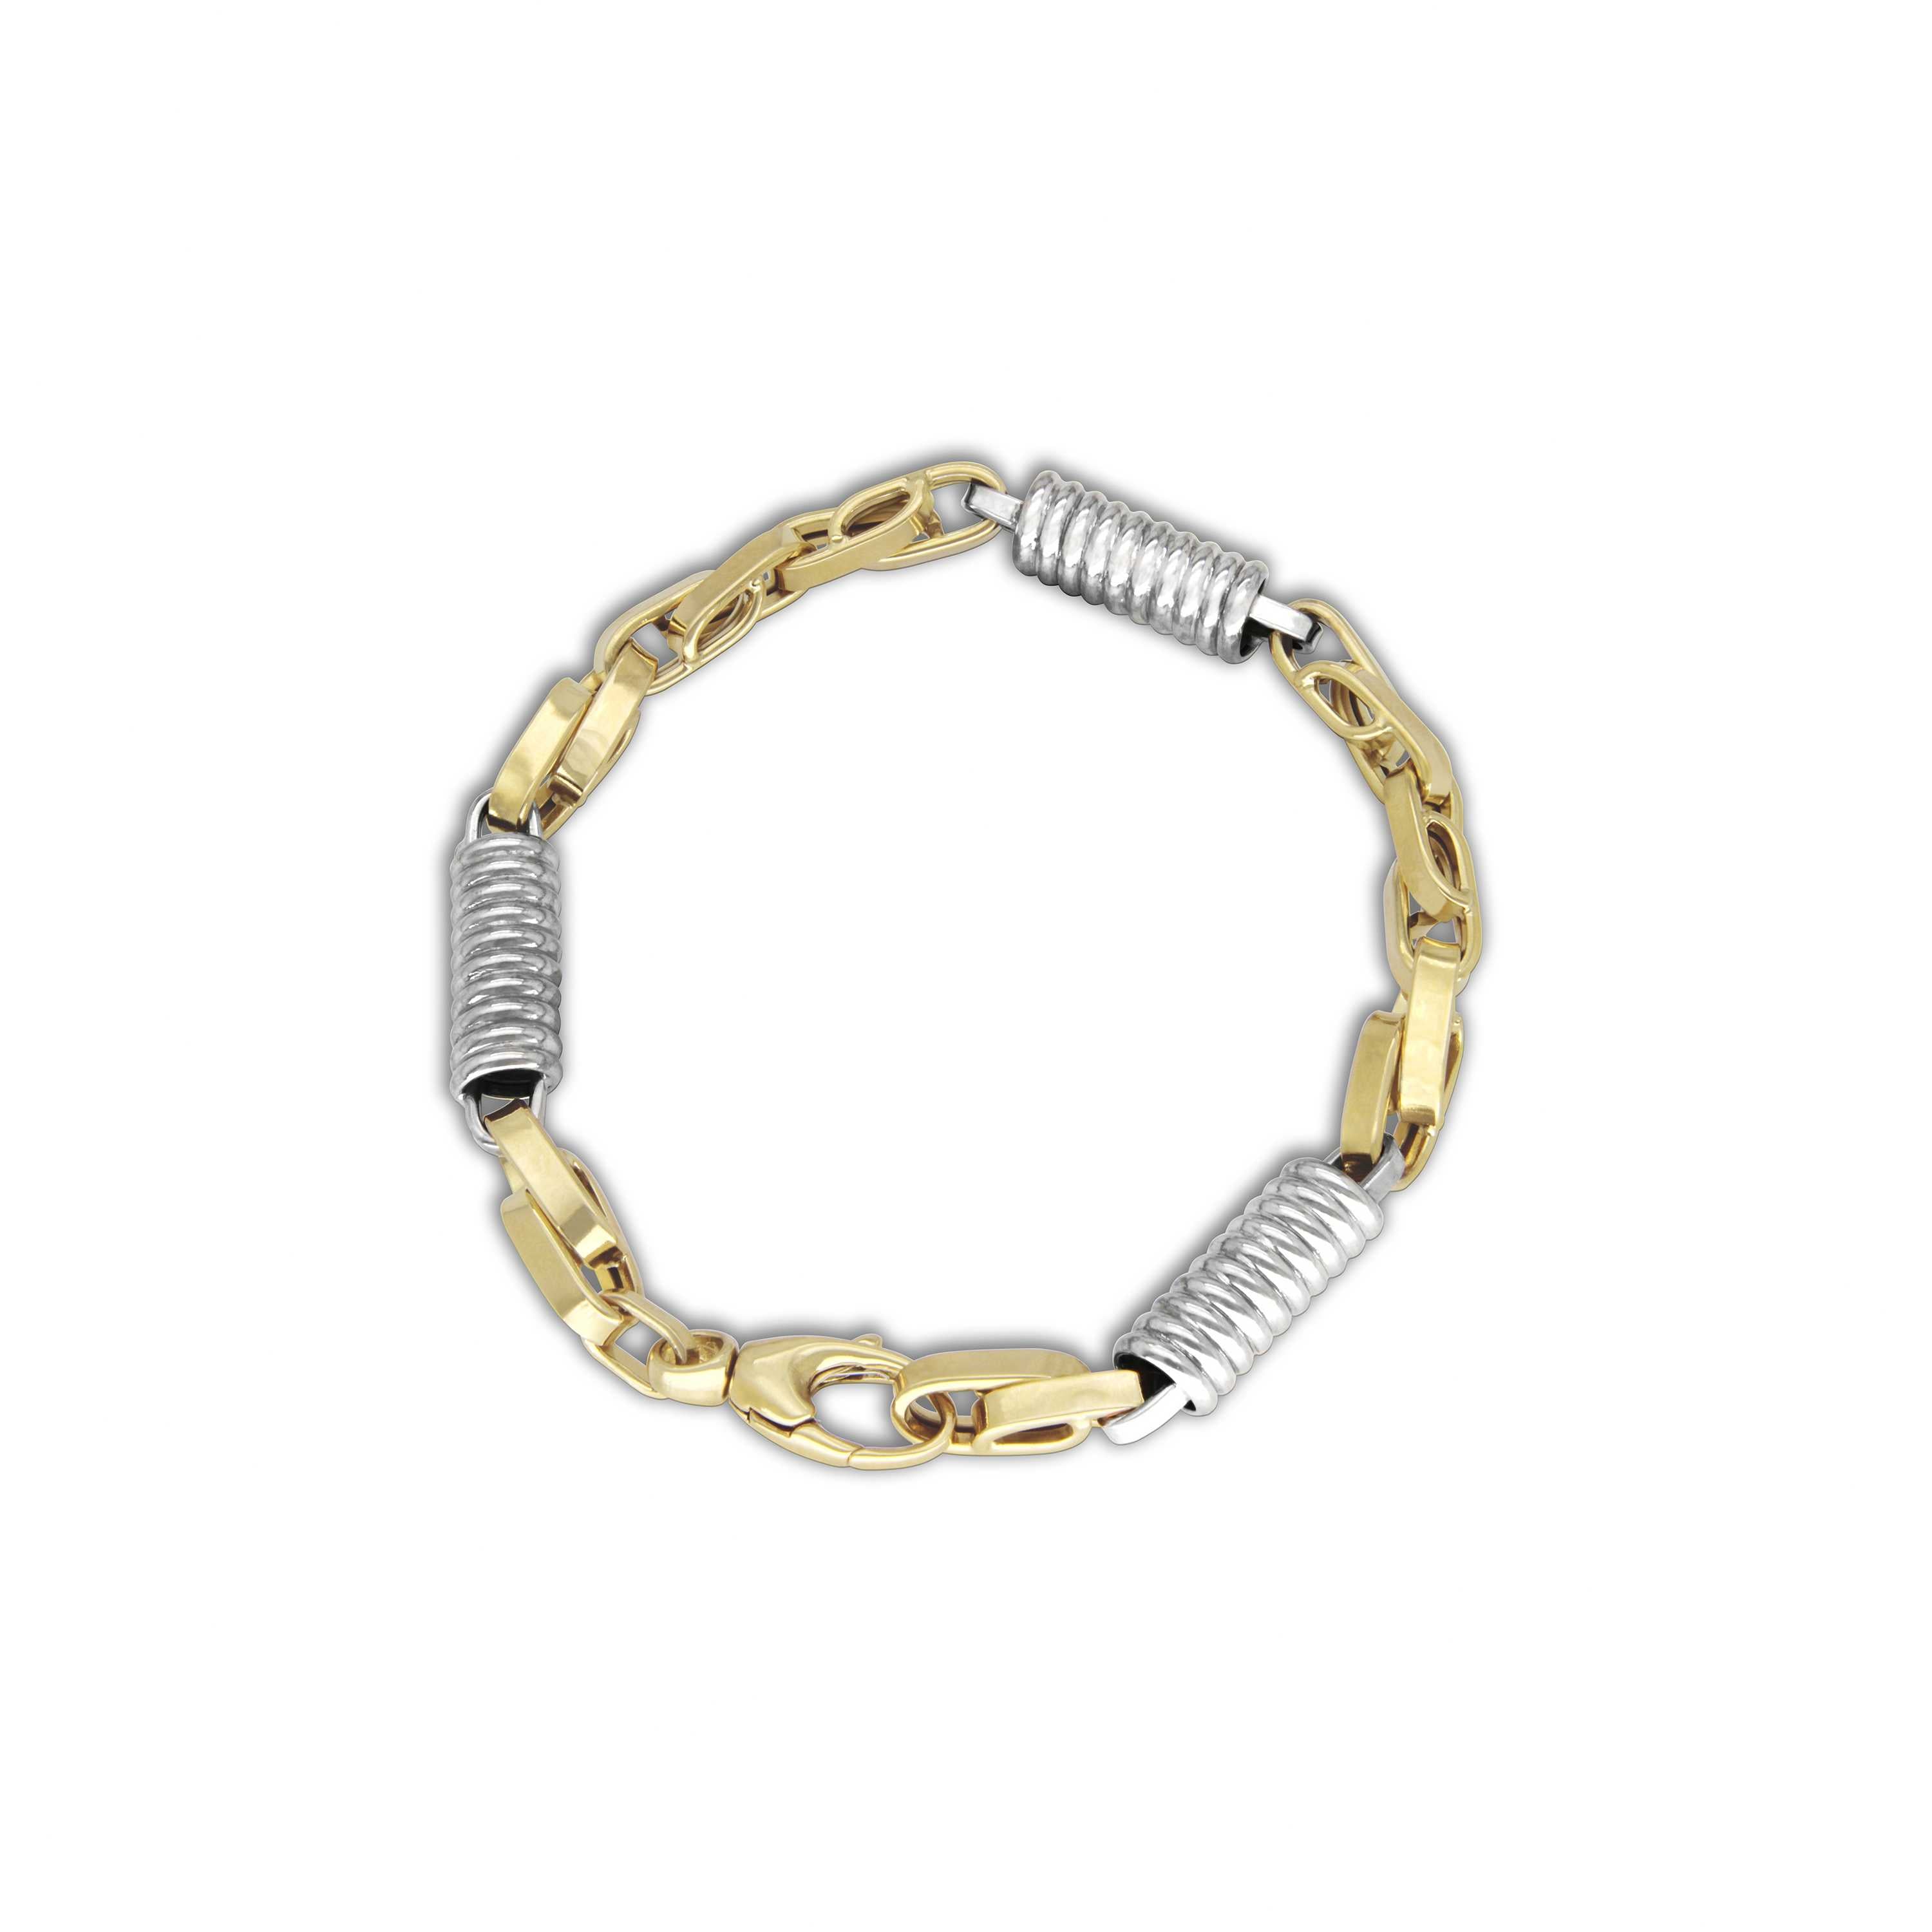 Italian bracelets - Florence jewelry stores - Jean Saade